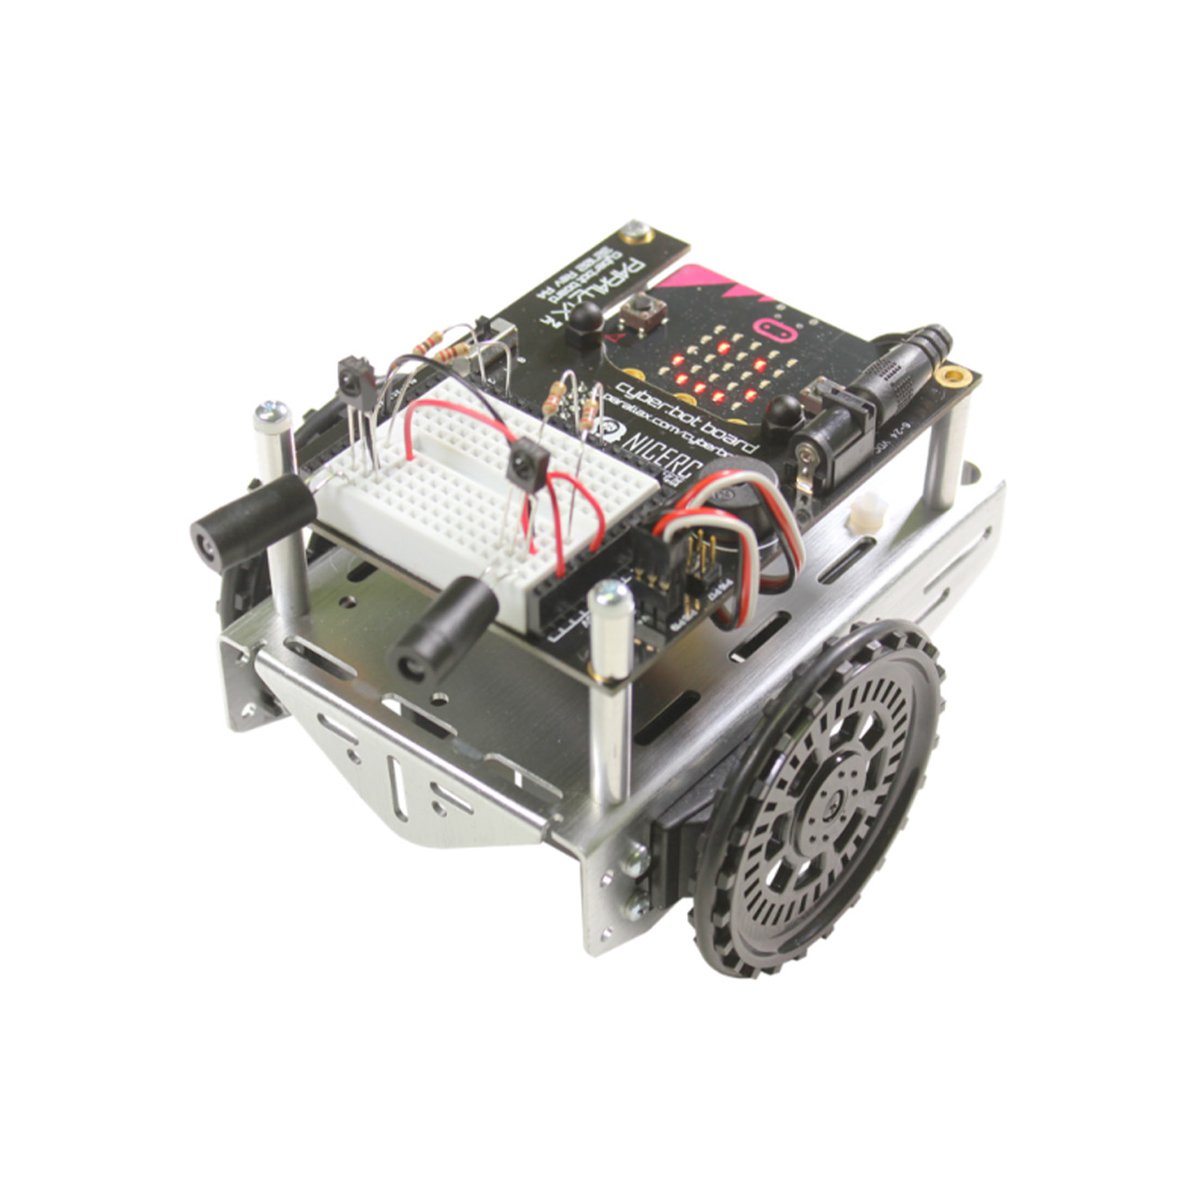 Boe-Bot Robot Kit - USB - Parallax